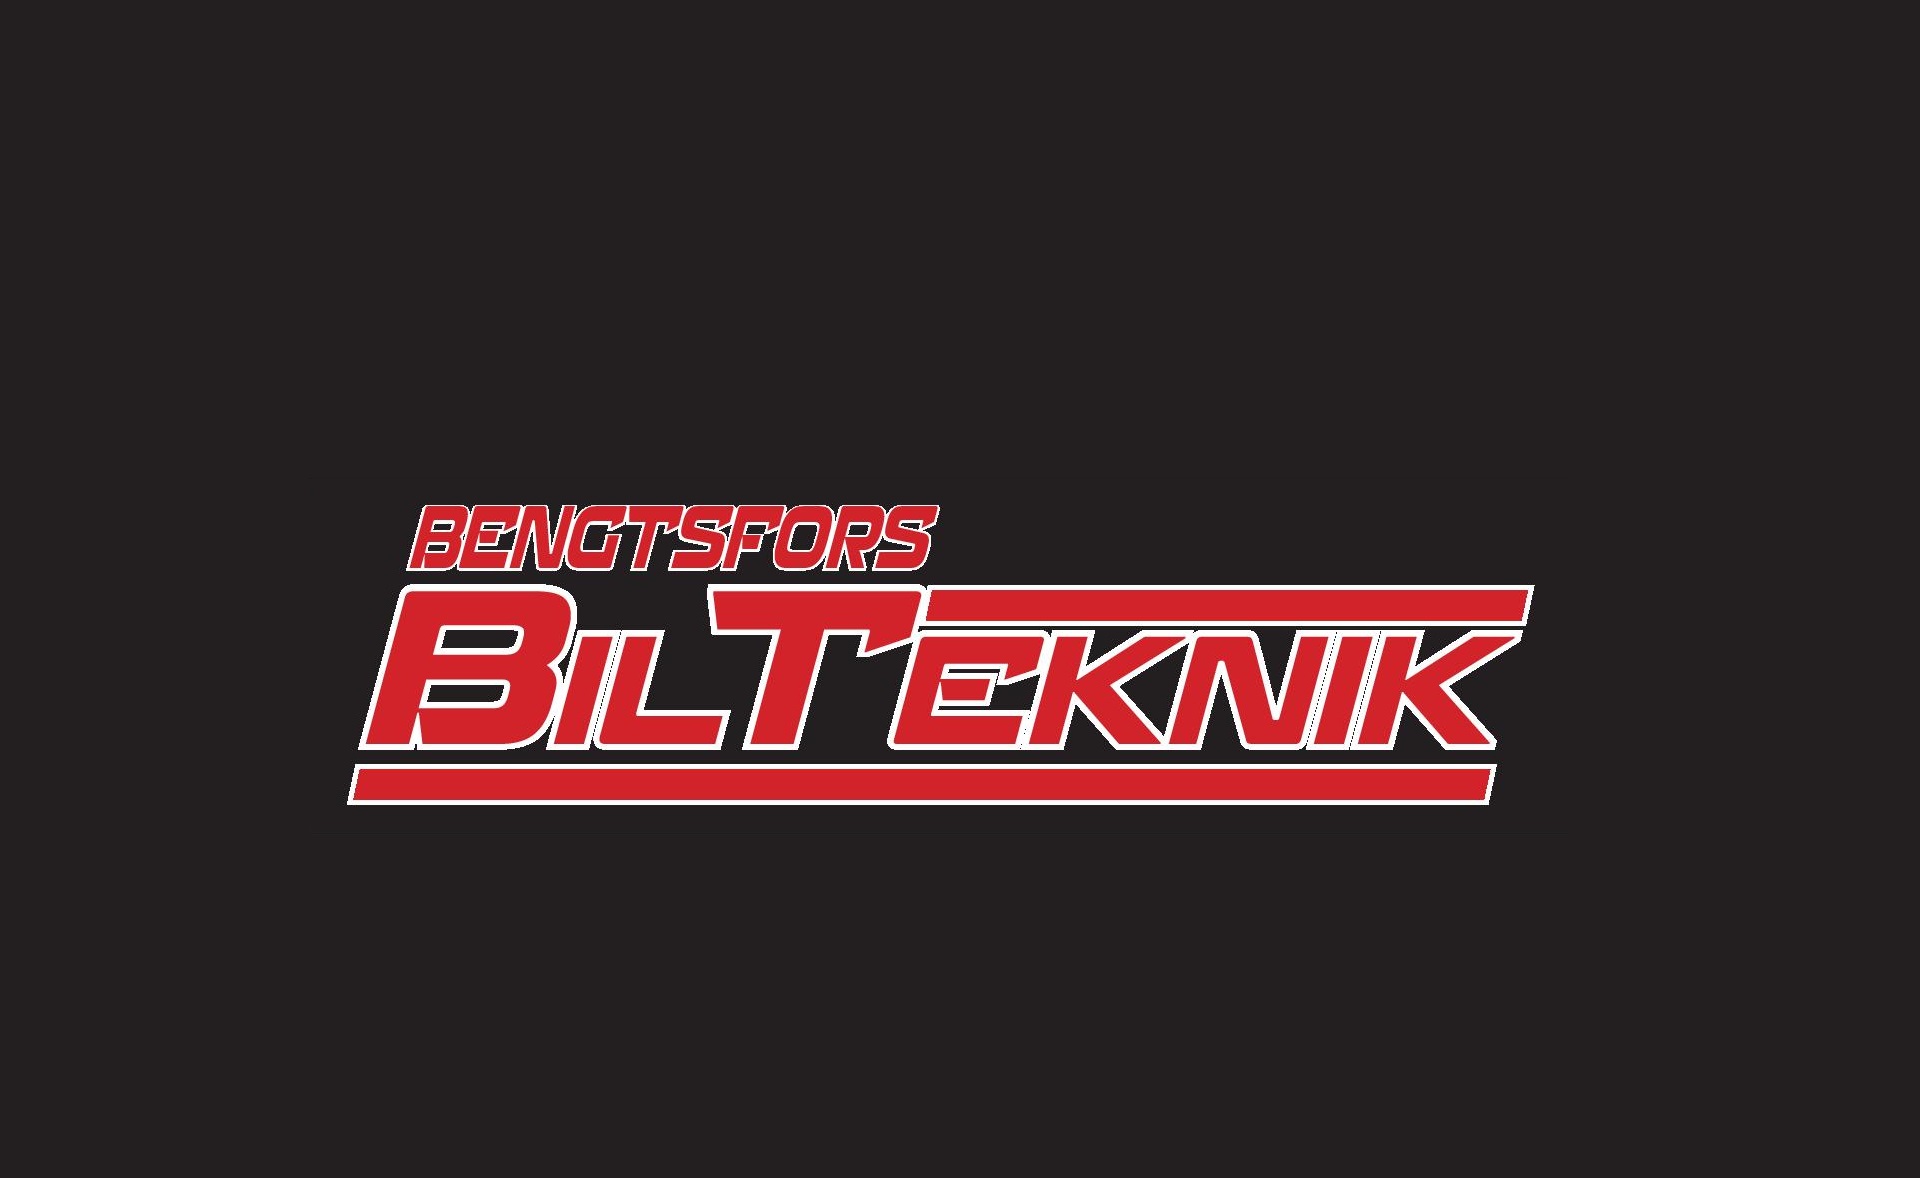 Bengtsfors BilTeknik logo